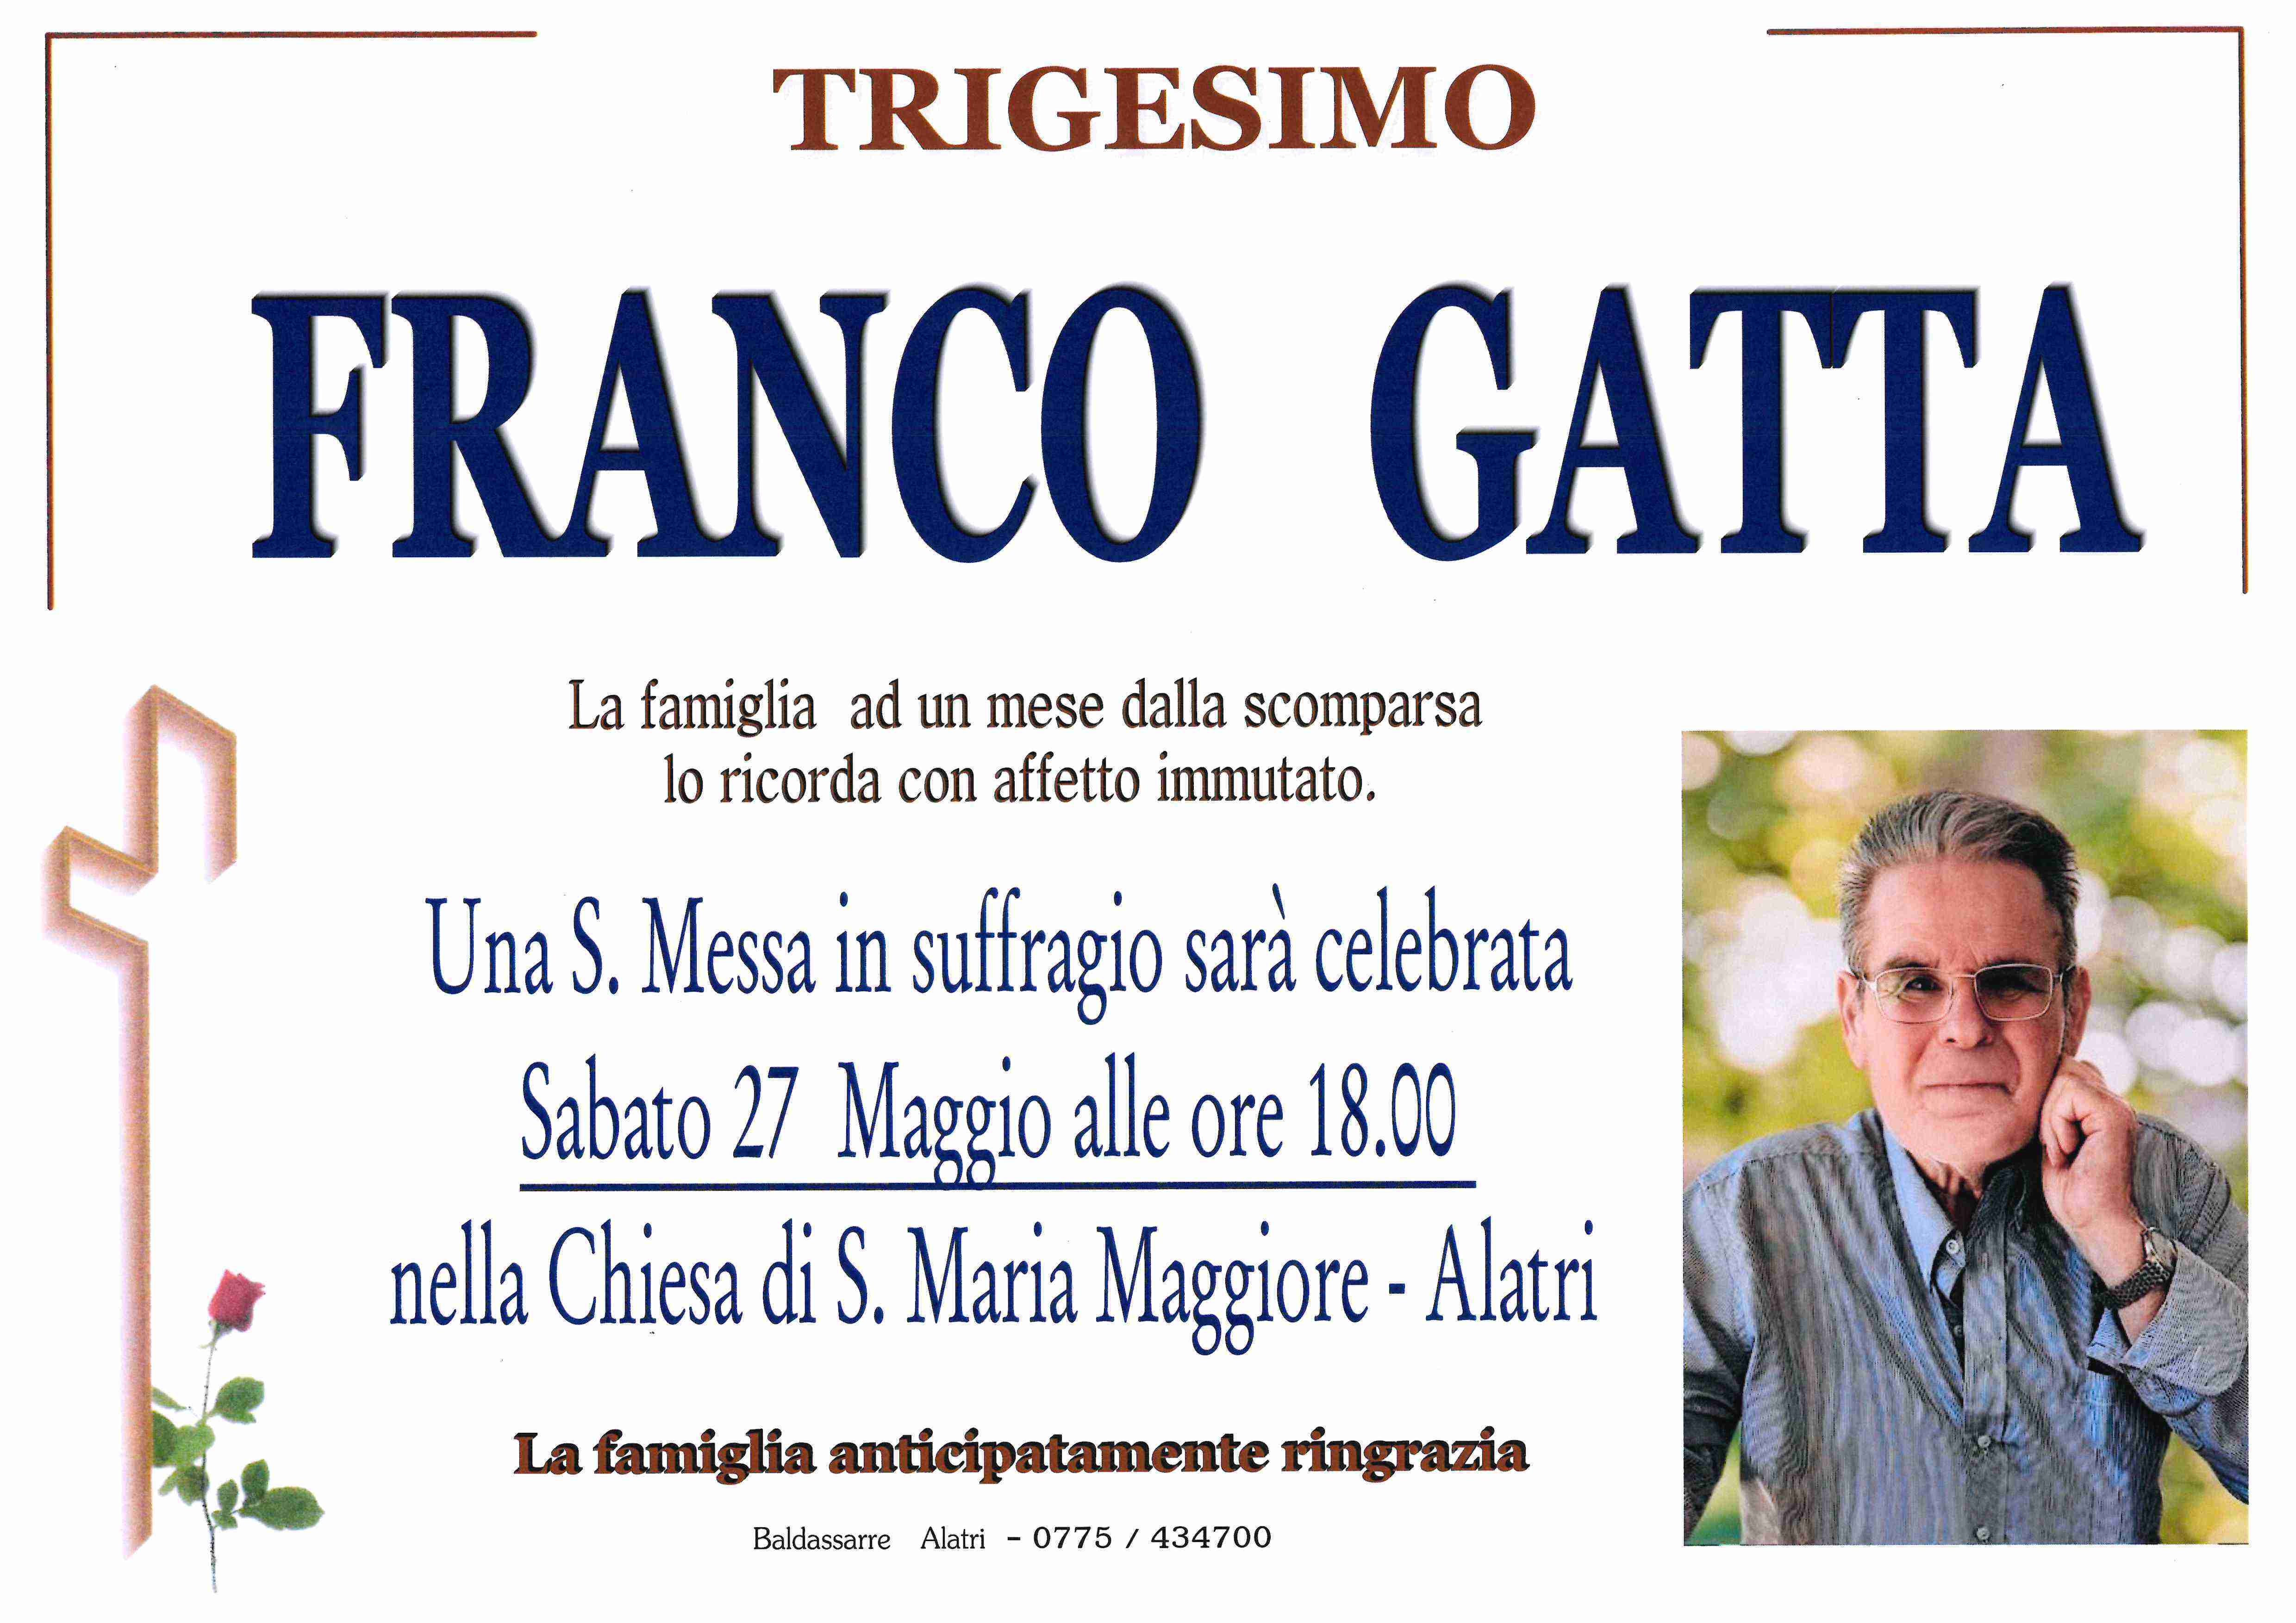 Franco Gatta